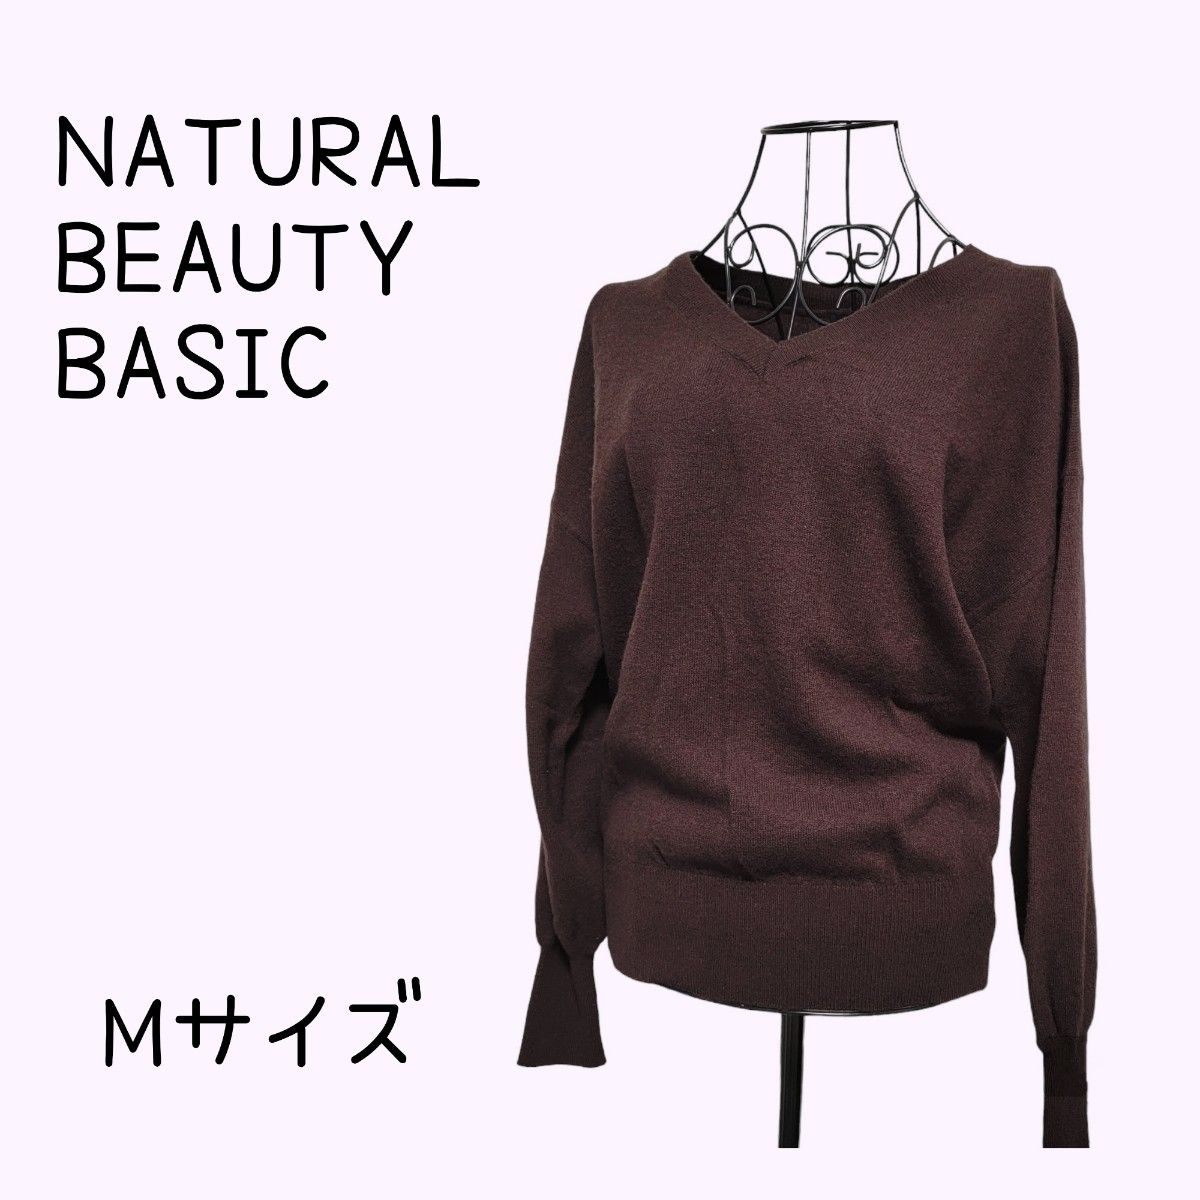 【NATURAL BEAUTY BASIC】カシミア混 軽くて暖かいVネックセーター M【ナチュラルビューティベーシック】